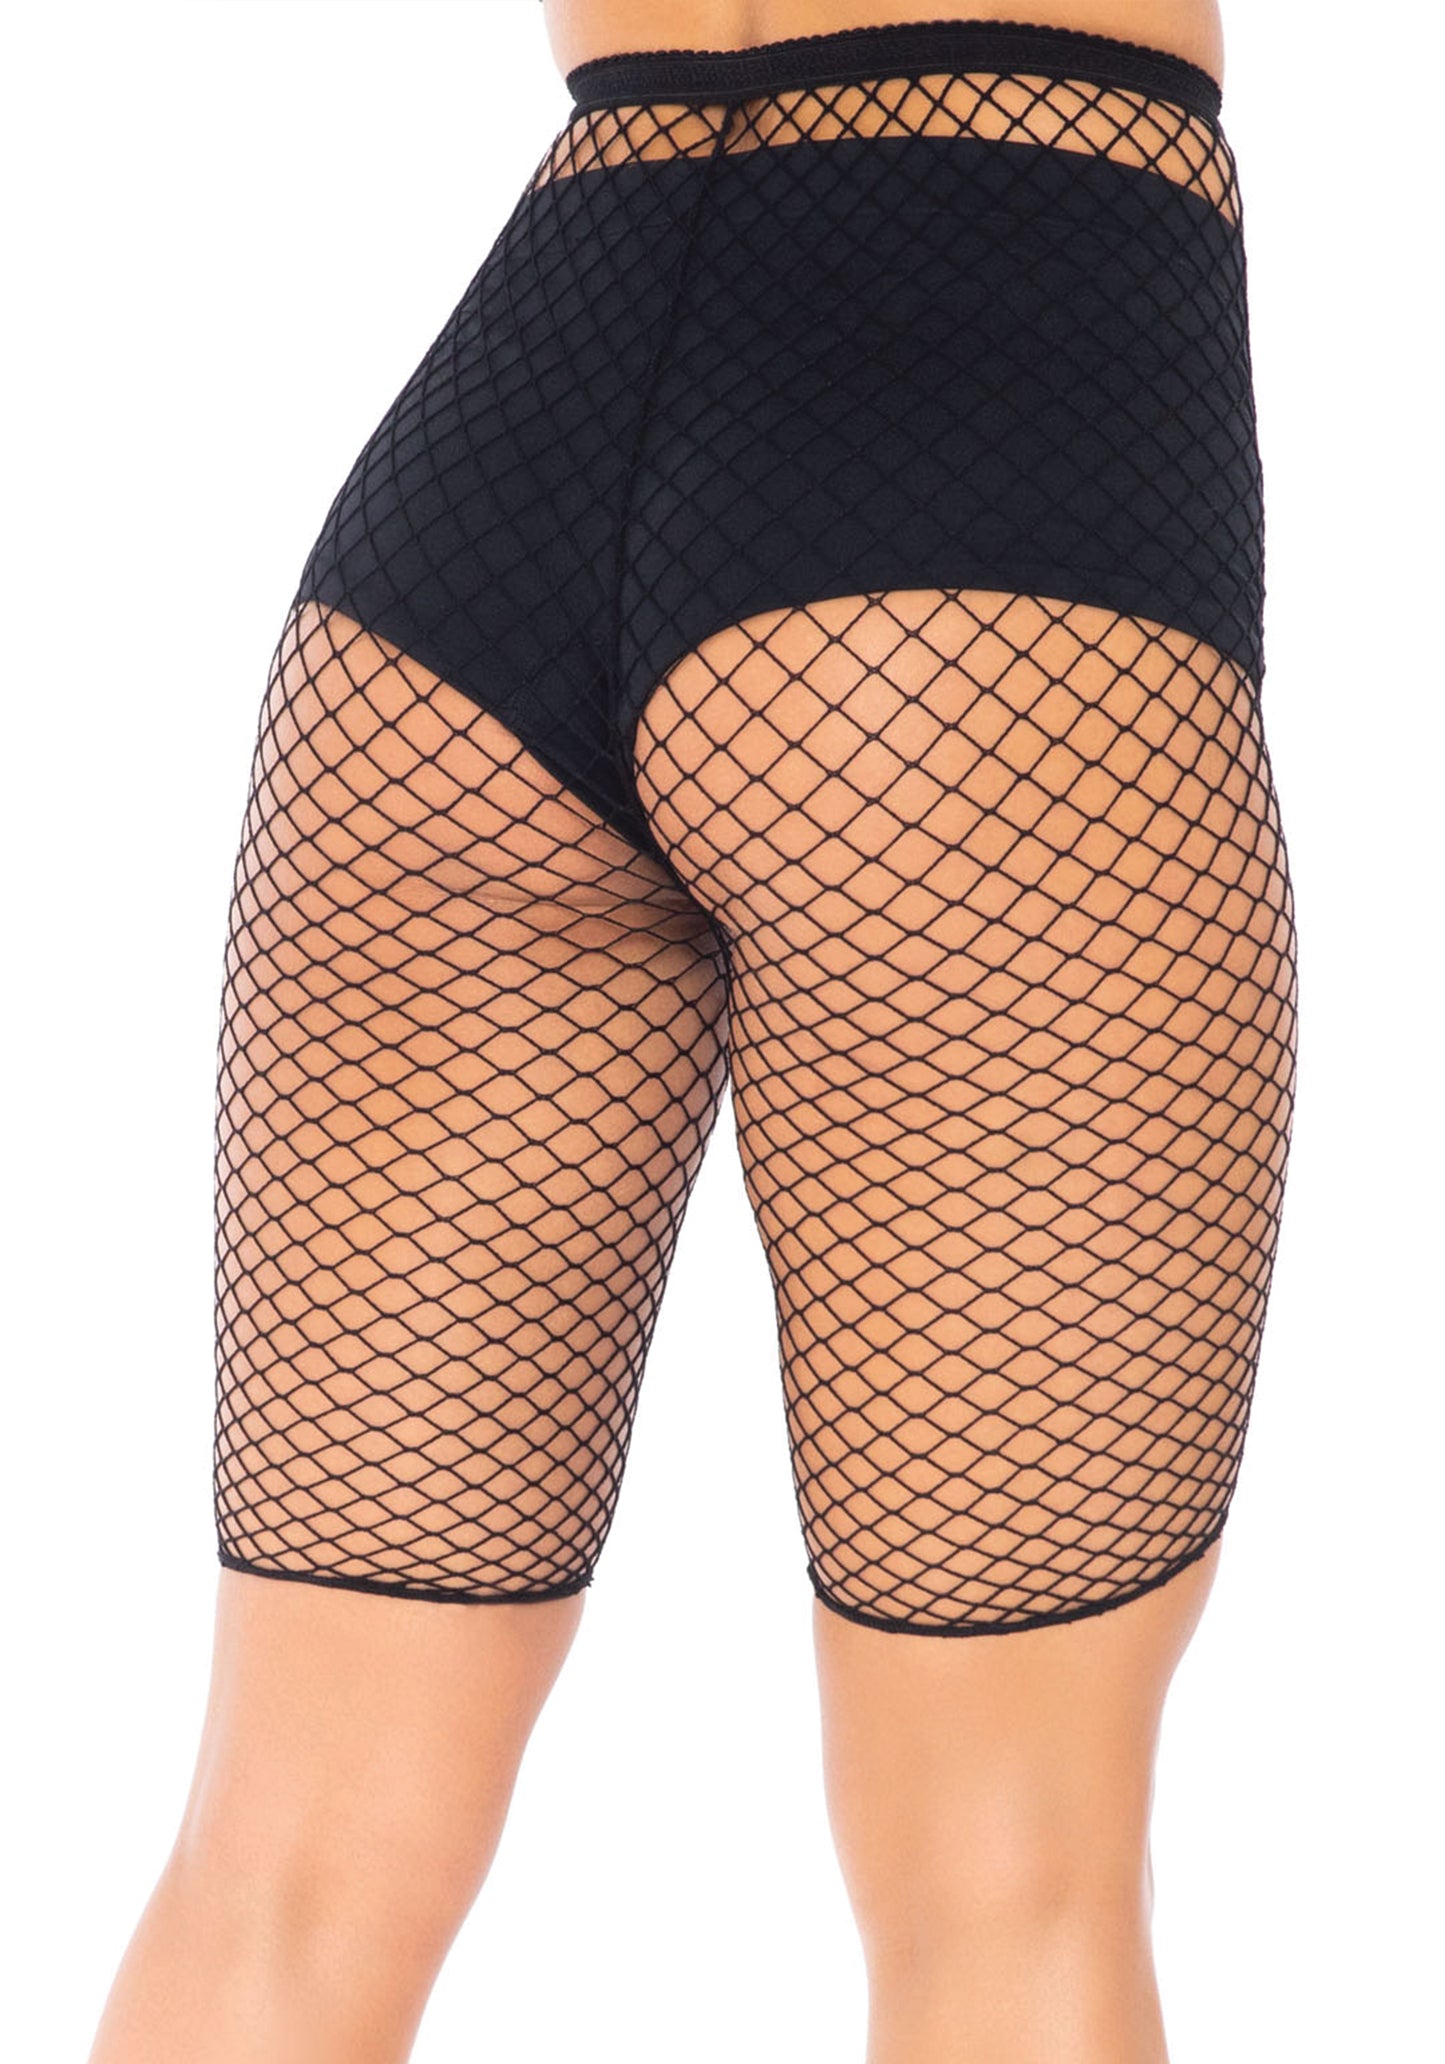 Leg Avenue 8882 Industrial Net Biker Shorts - black fishnet bicycle shorts